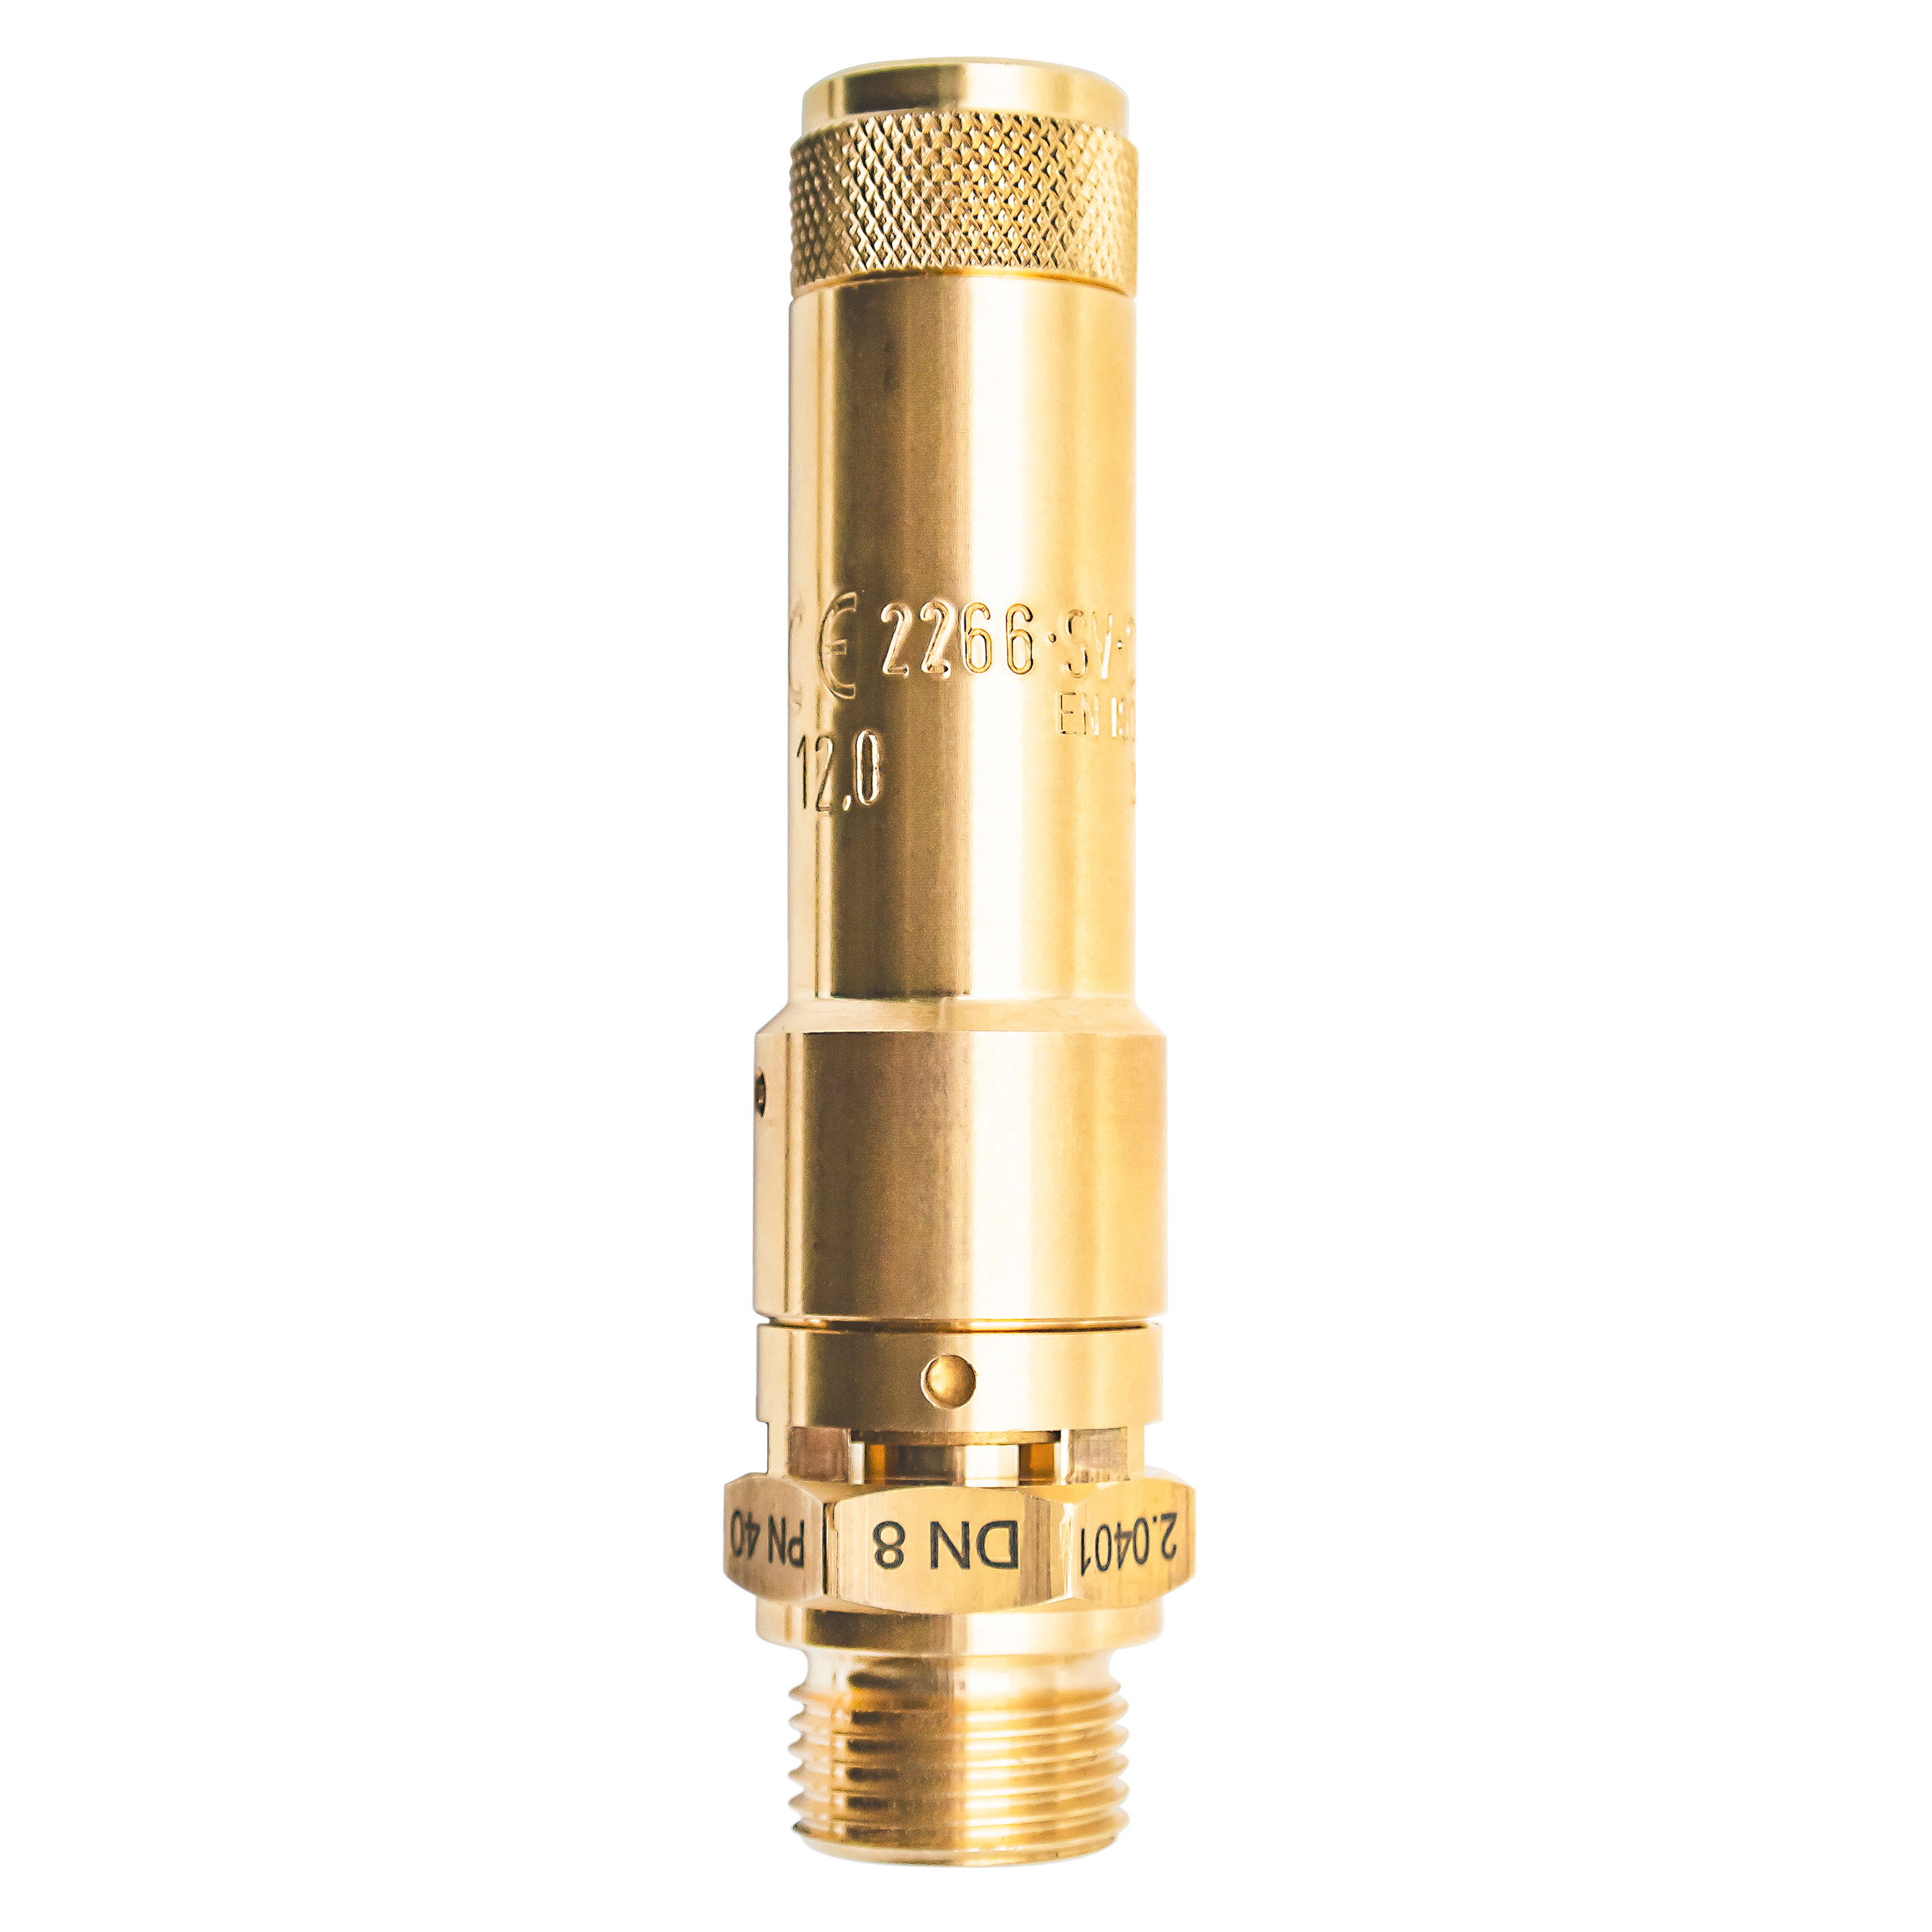 Component-tested safety valve DN 8, G⅜, pressure: 9.1-15 bar